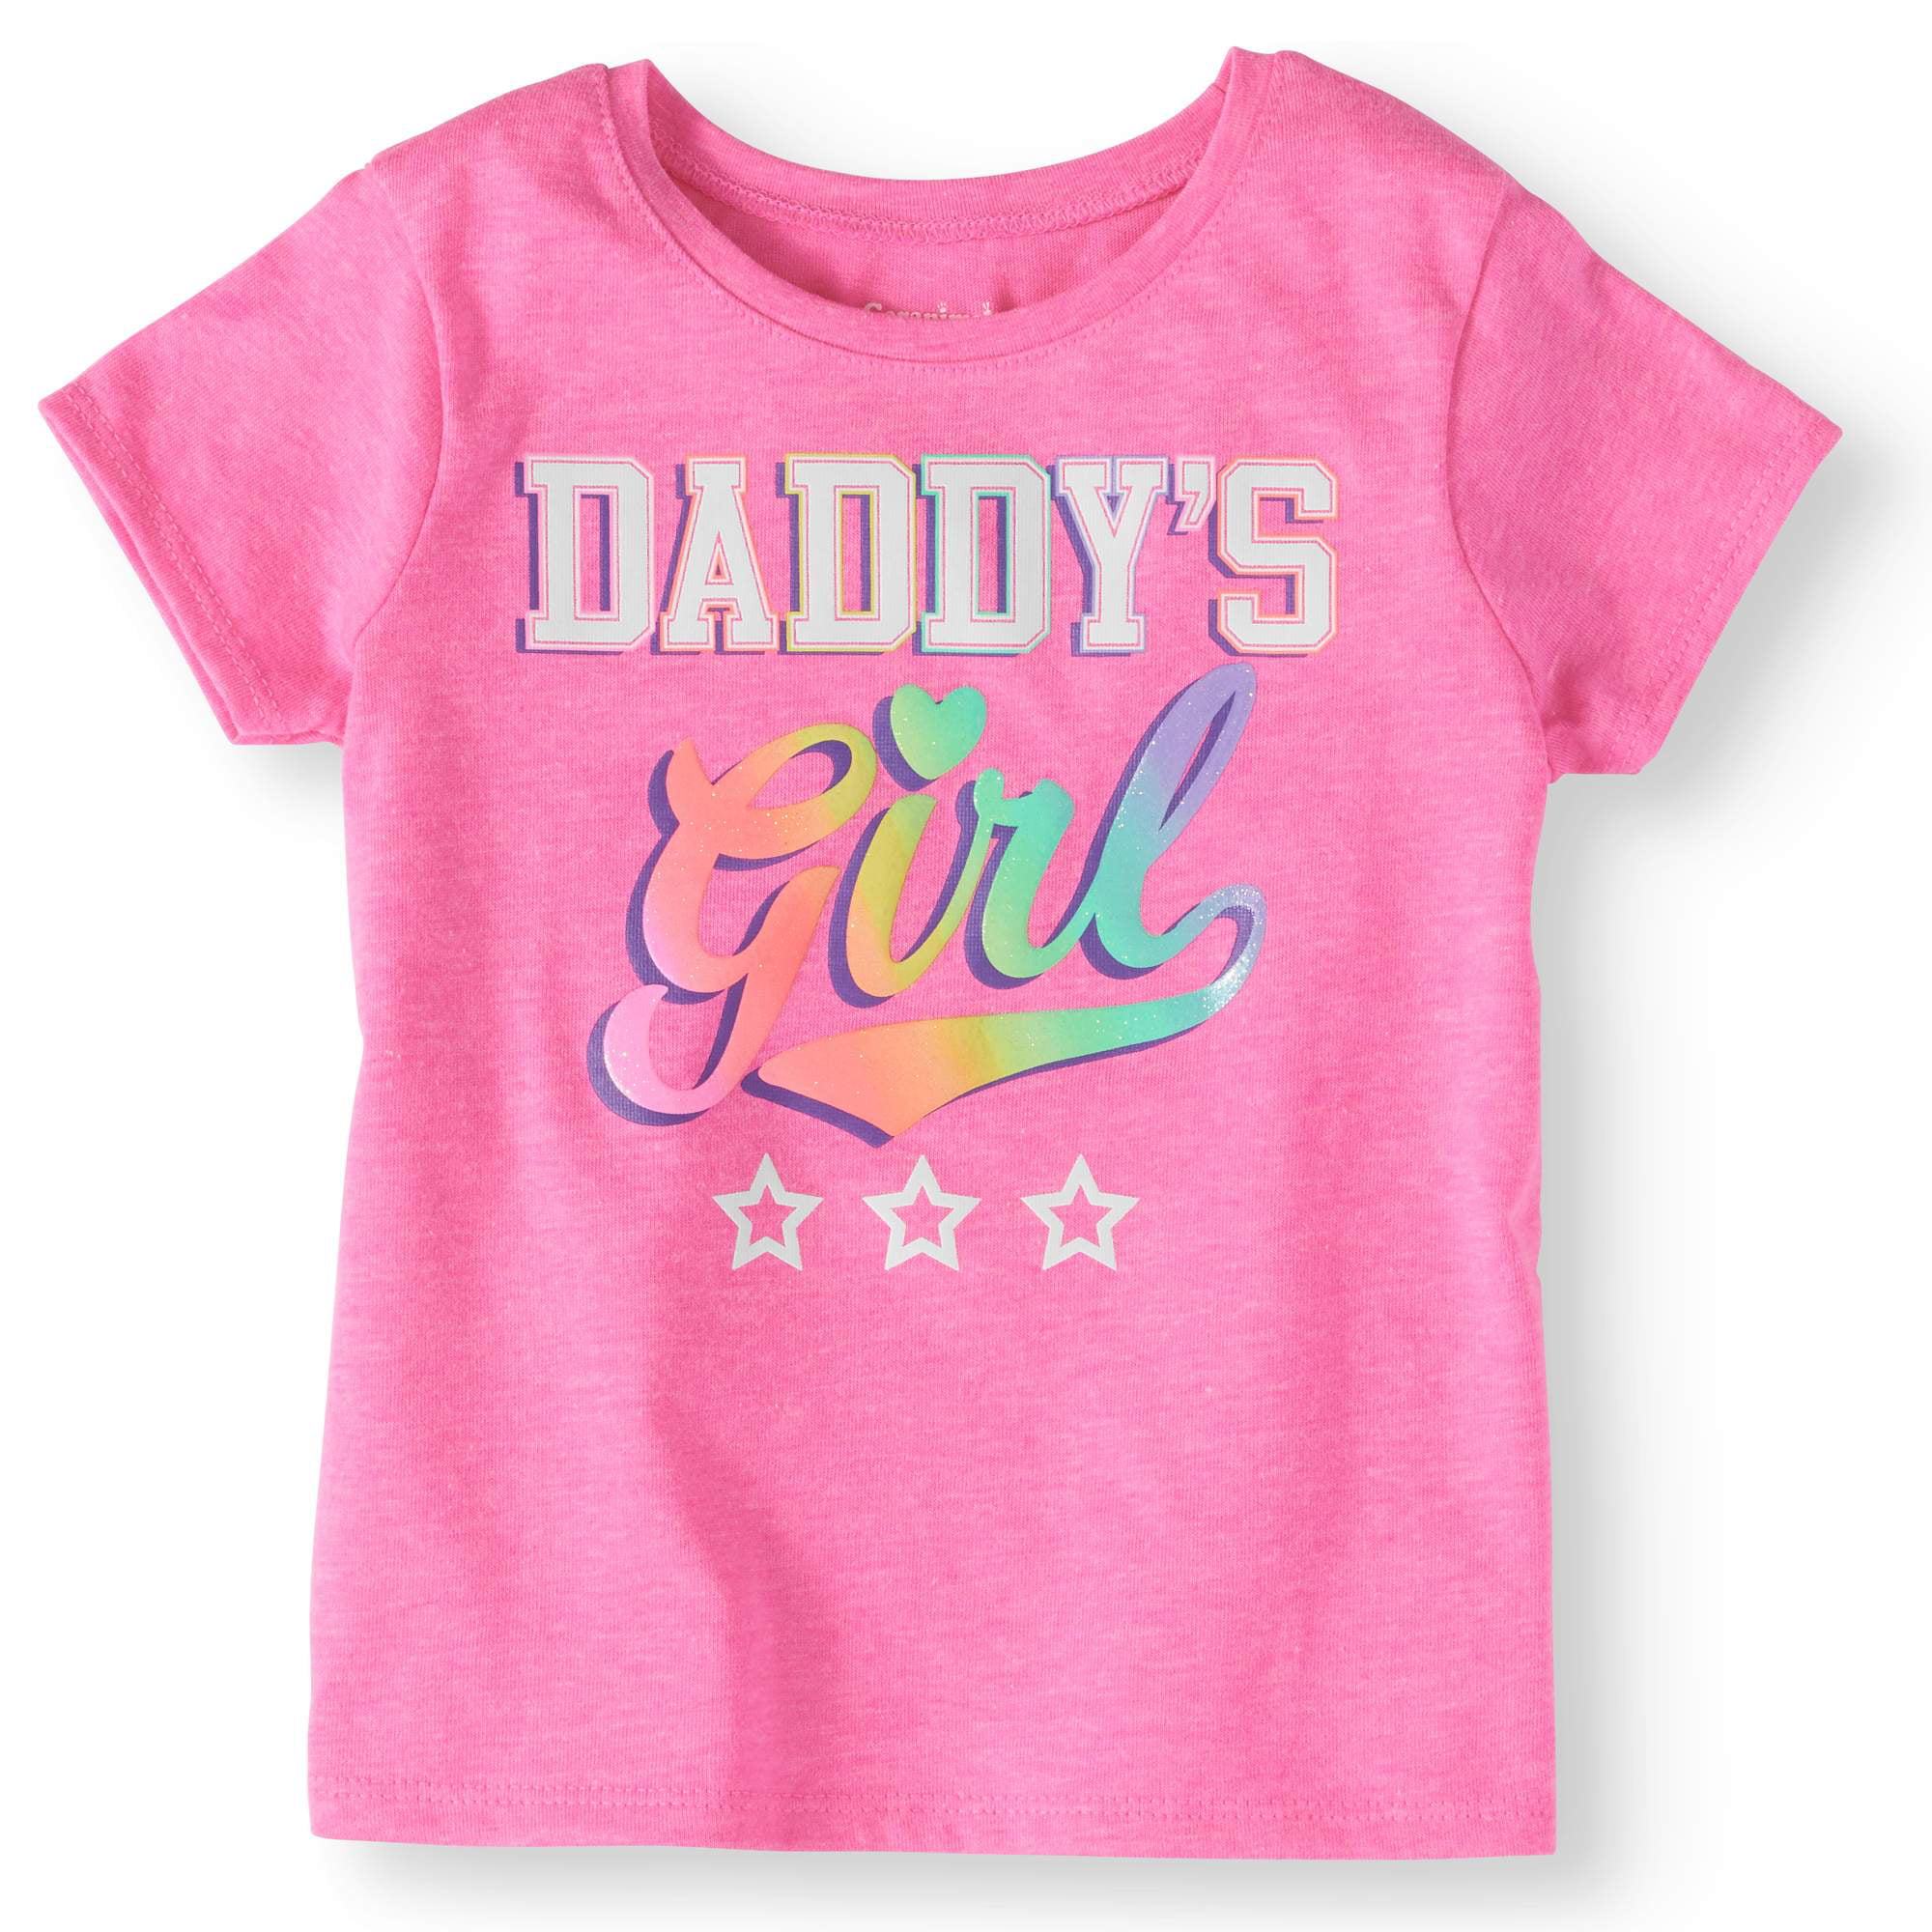 Garanimals Short Sleeve Graphic T-Shirt (Toddler Girls) - Walmart.com